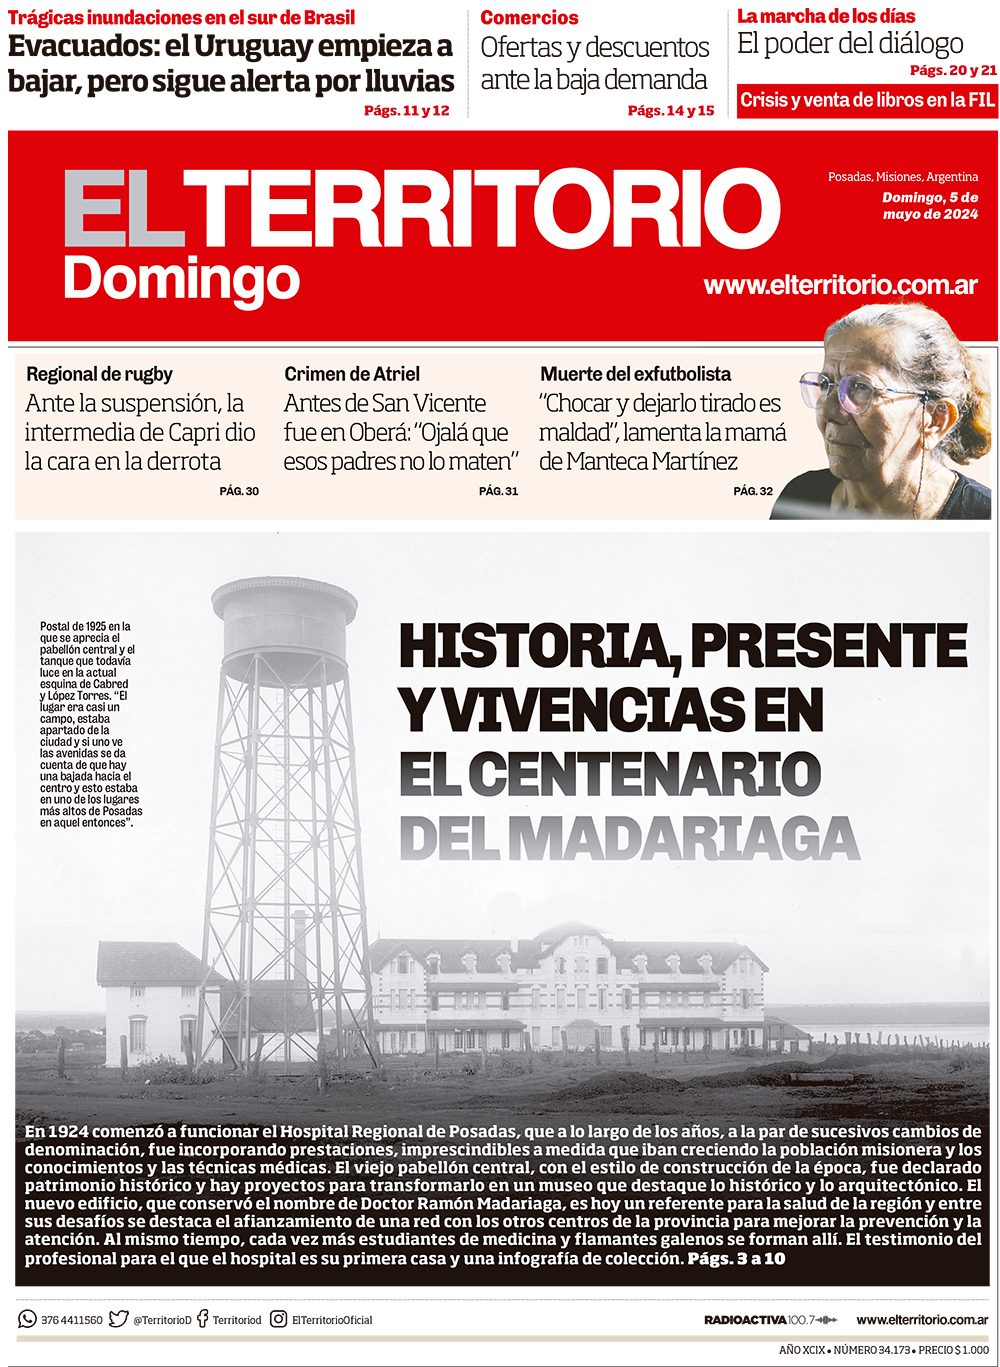 Tapa impresa del diario El Territorio